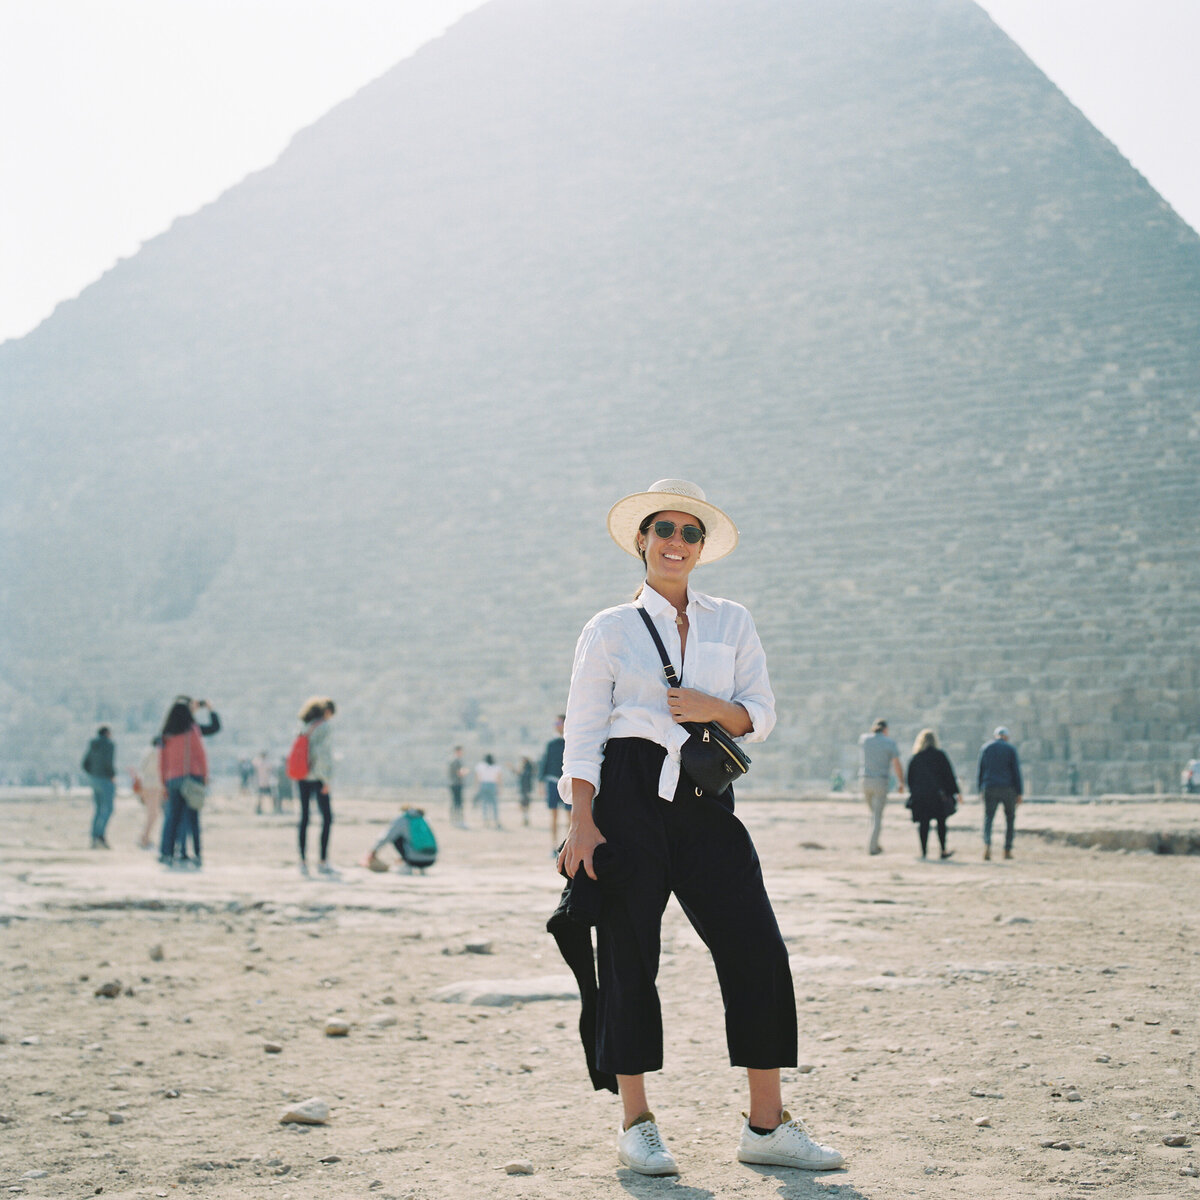 egypt-travel-003